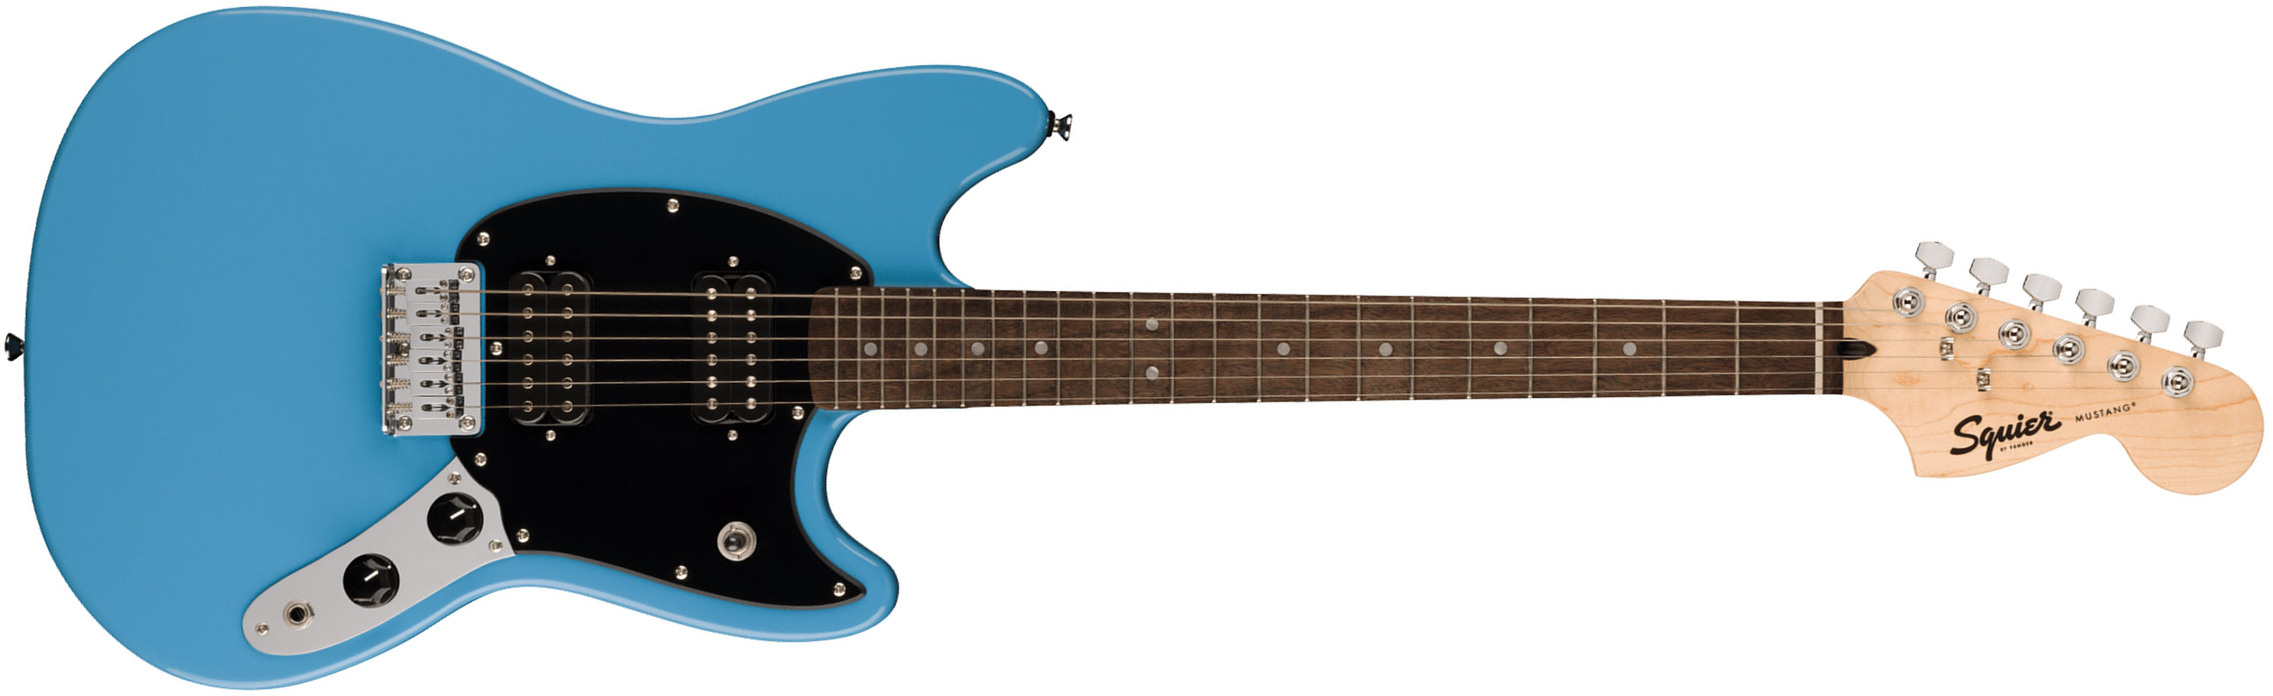 Squier Mustang Sonic Hh 2h Ht Lau - California Blue - Retro-rock elektrische gitaar - Main picture